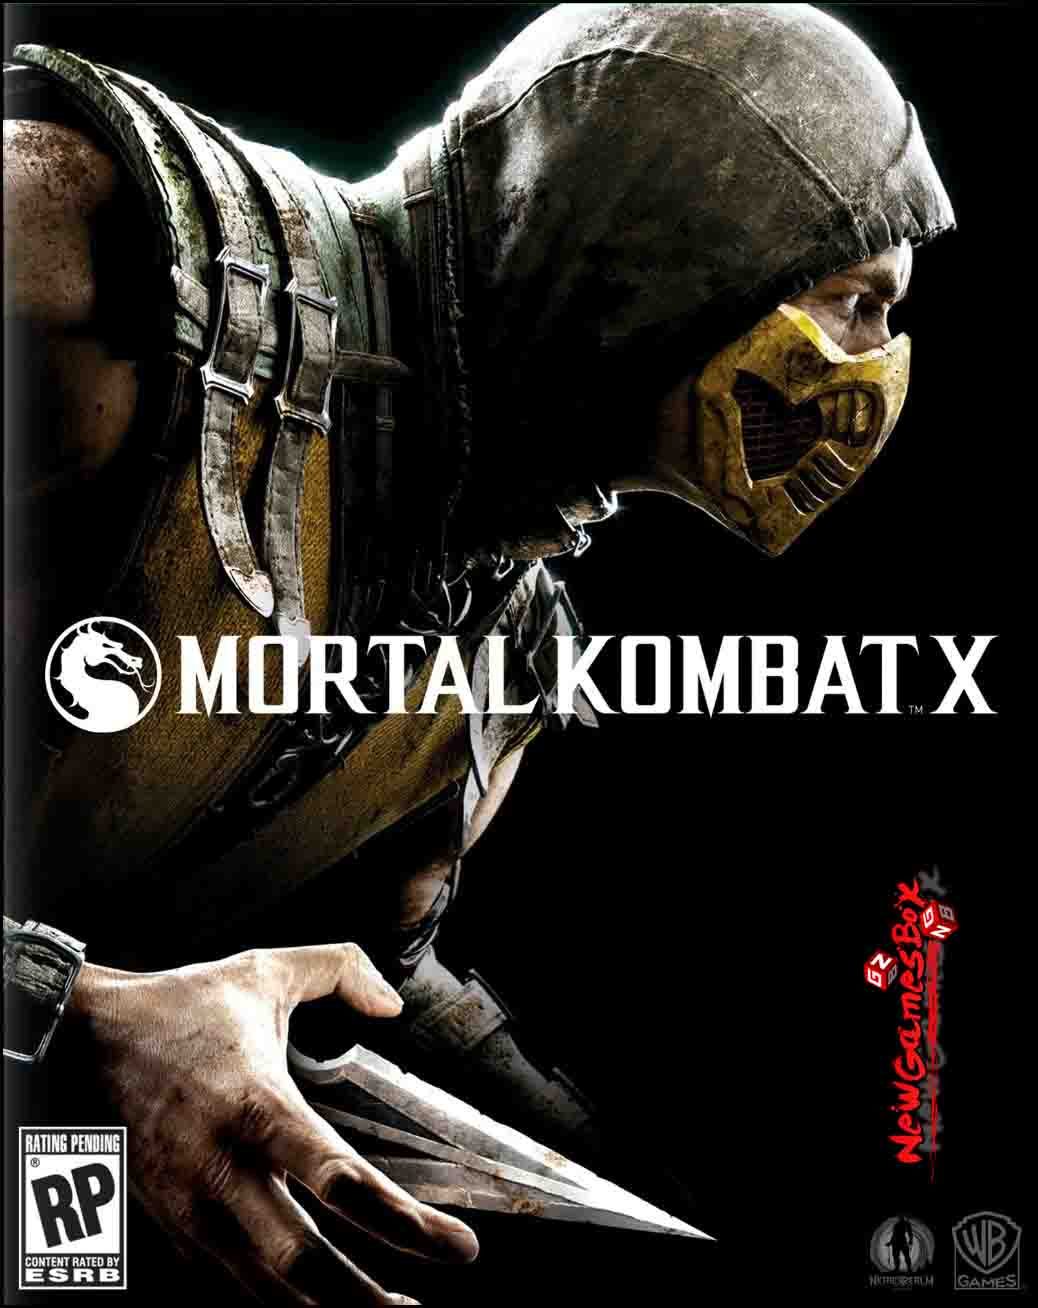 Mortal kombat x download pc highly compressed